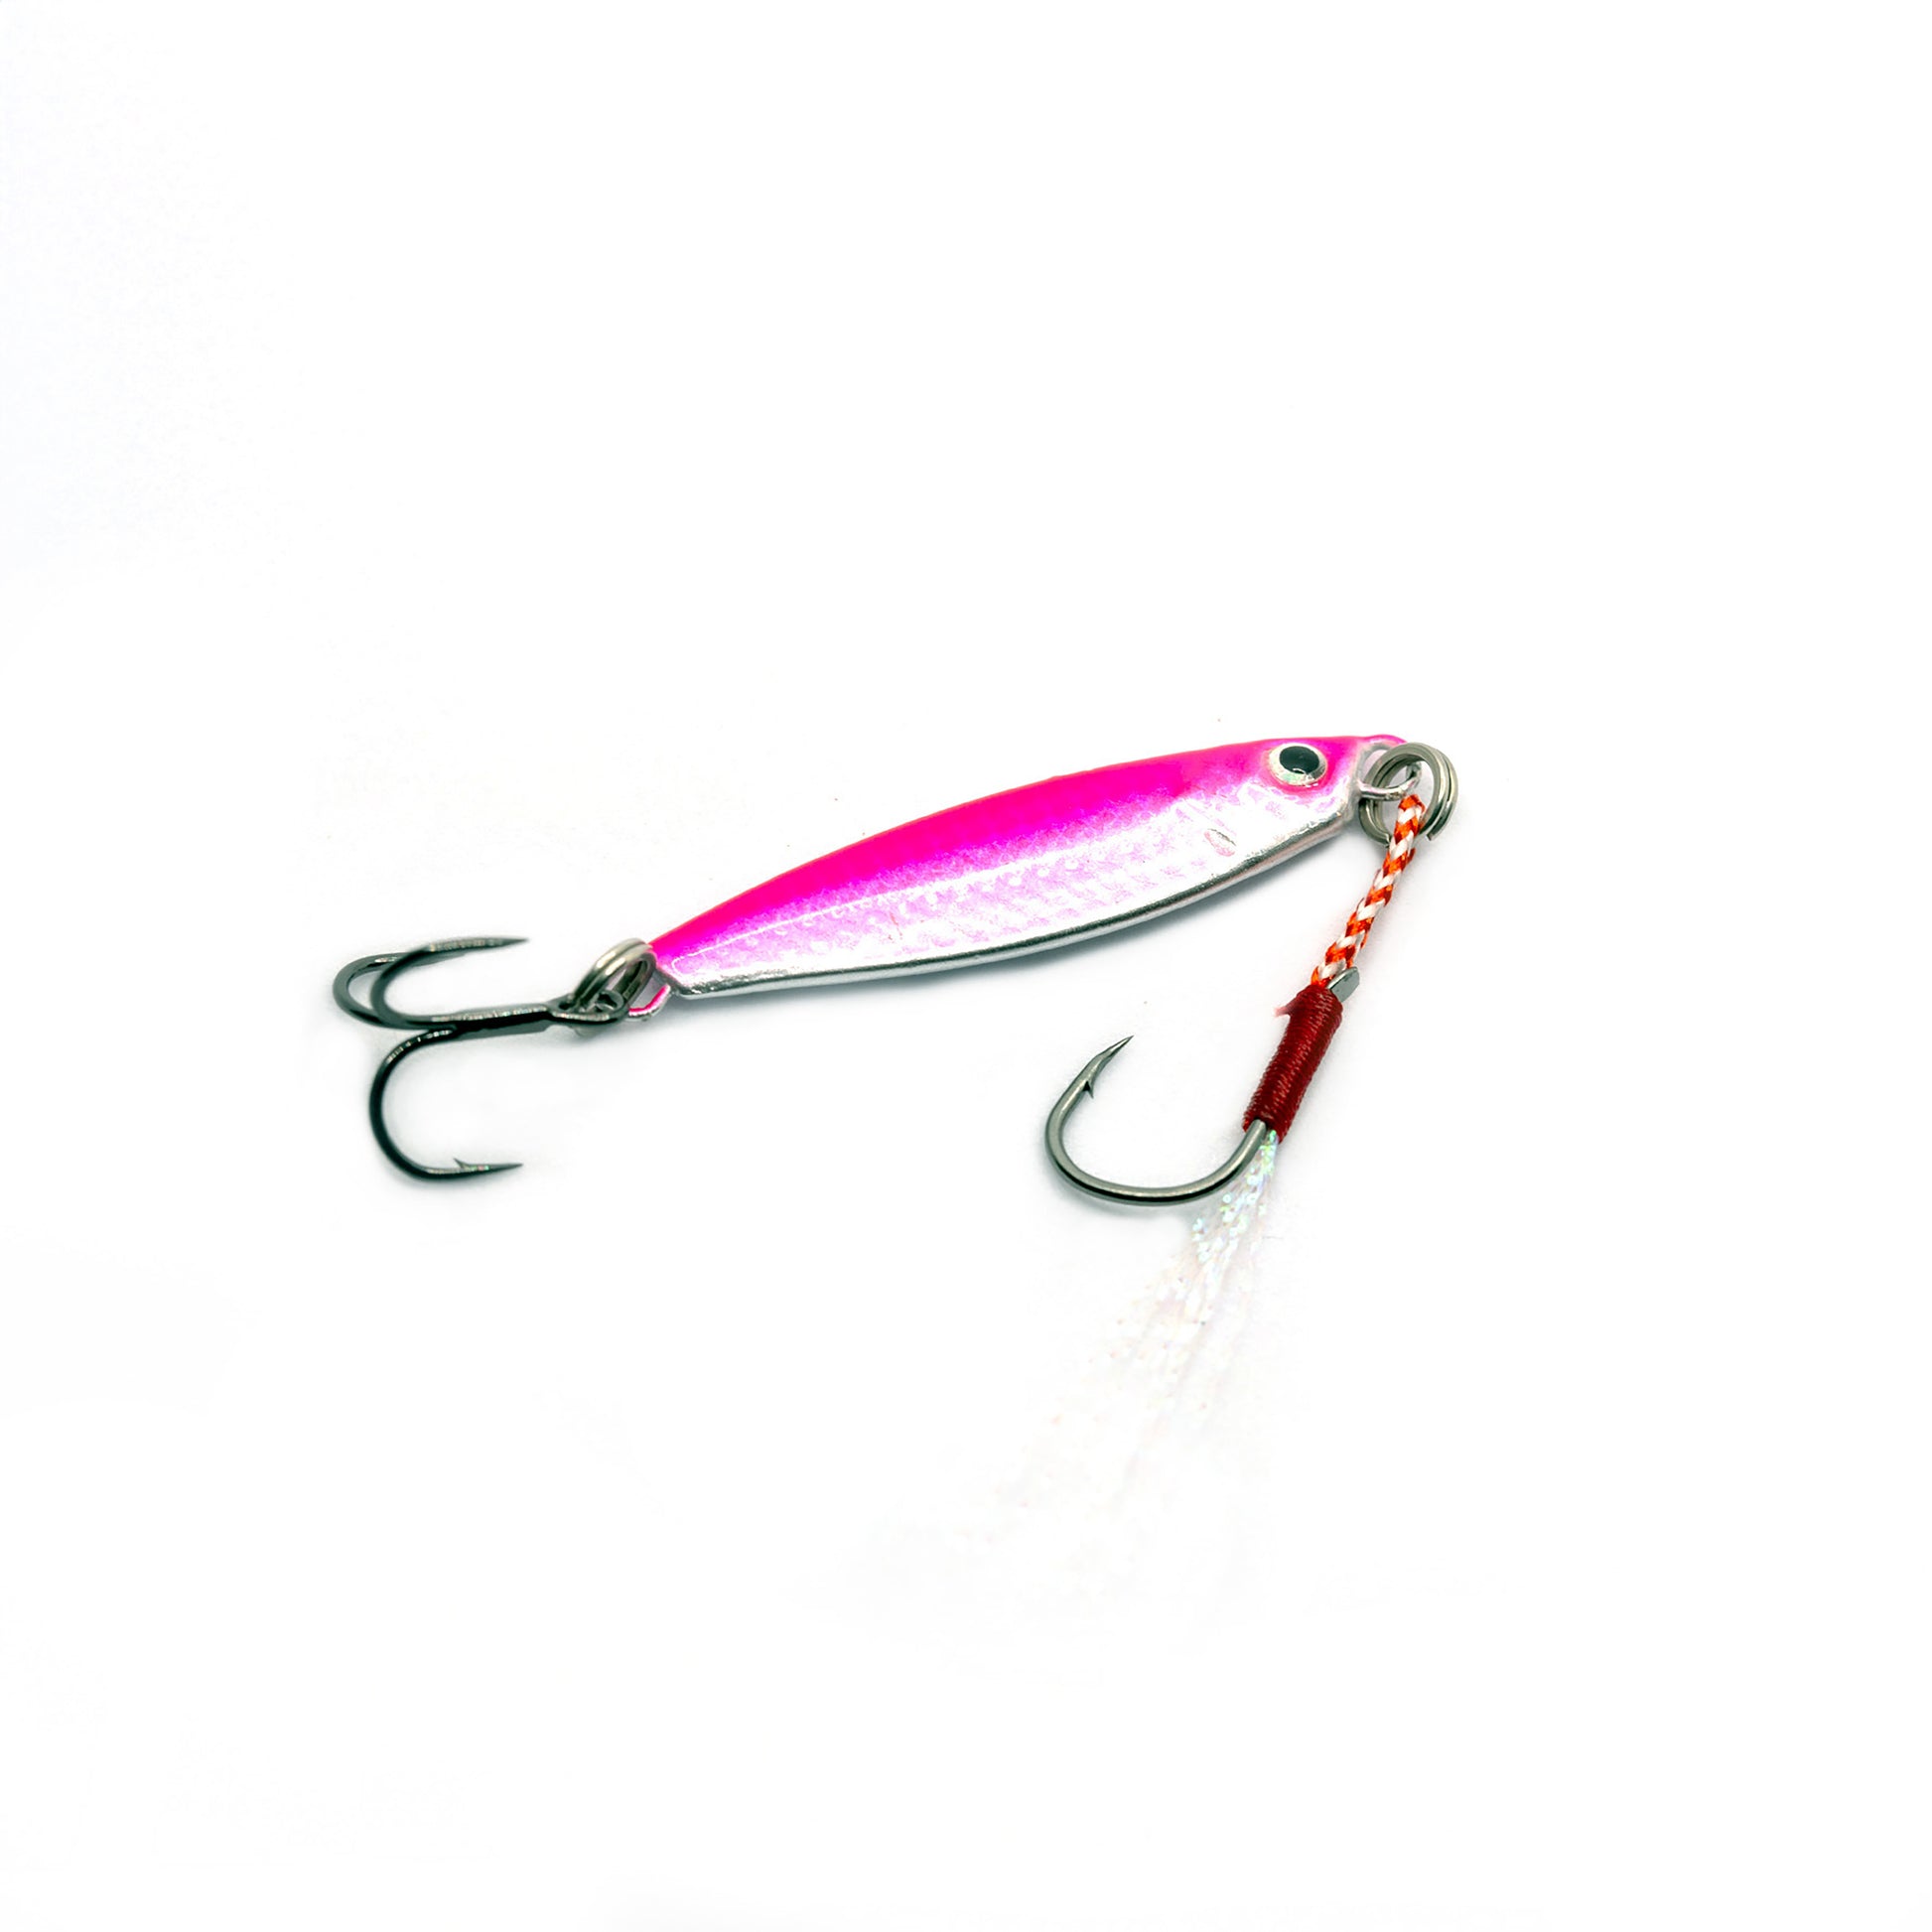 Pink/Silver 7g Micro Jig – Bouncing Jigs